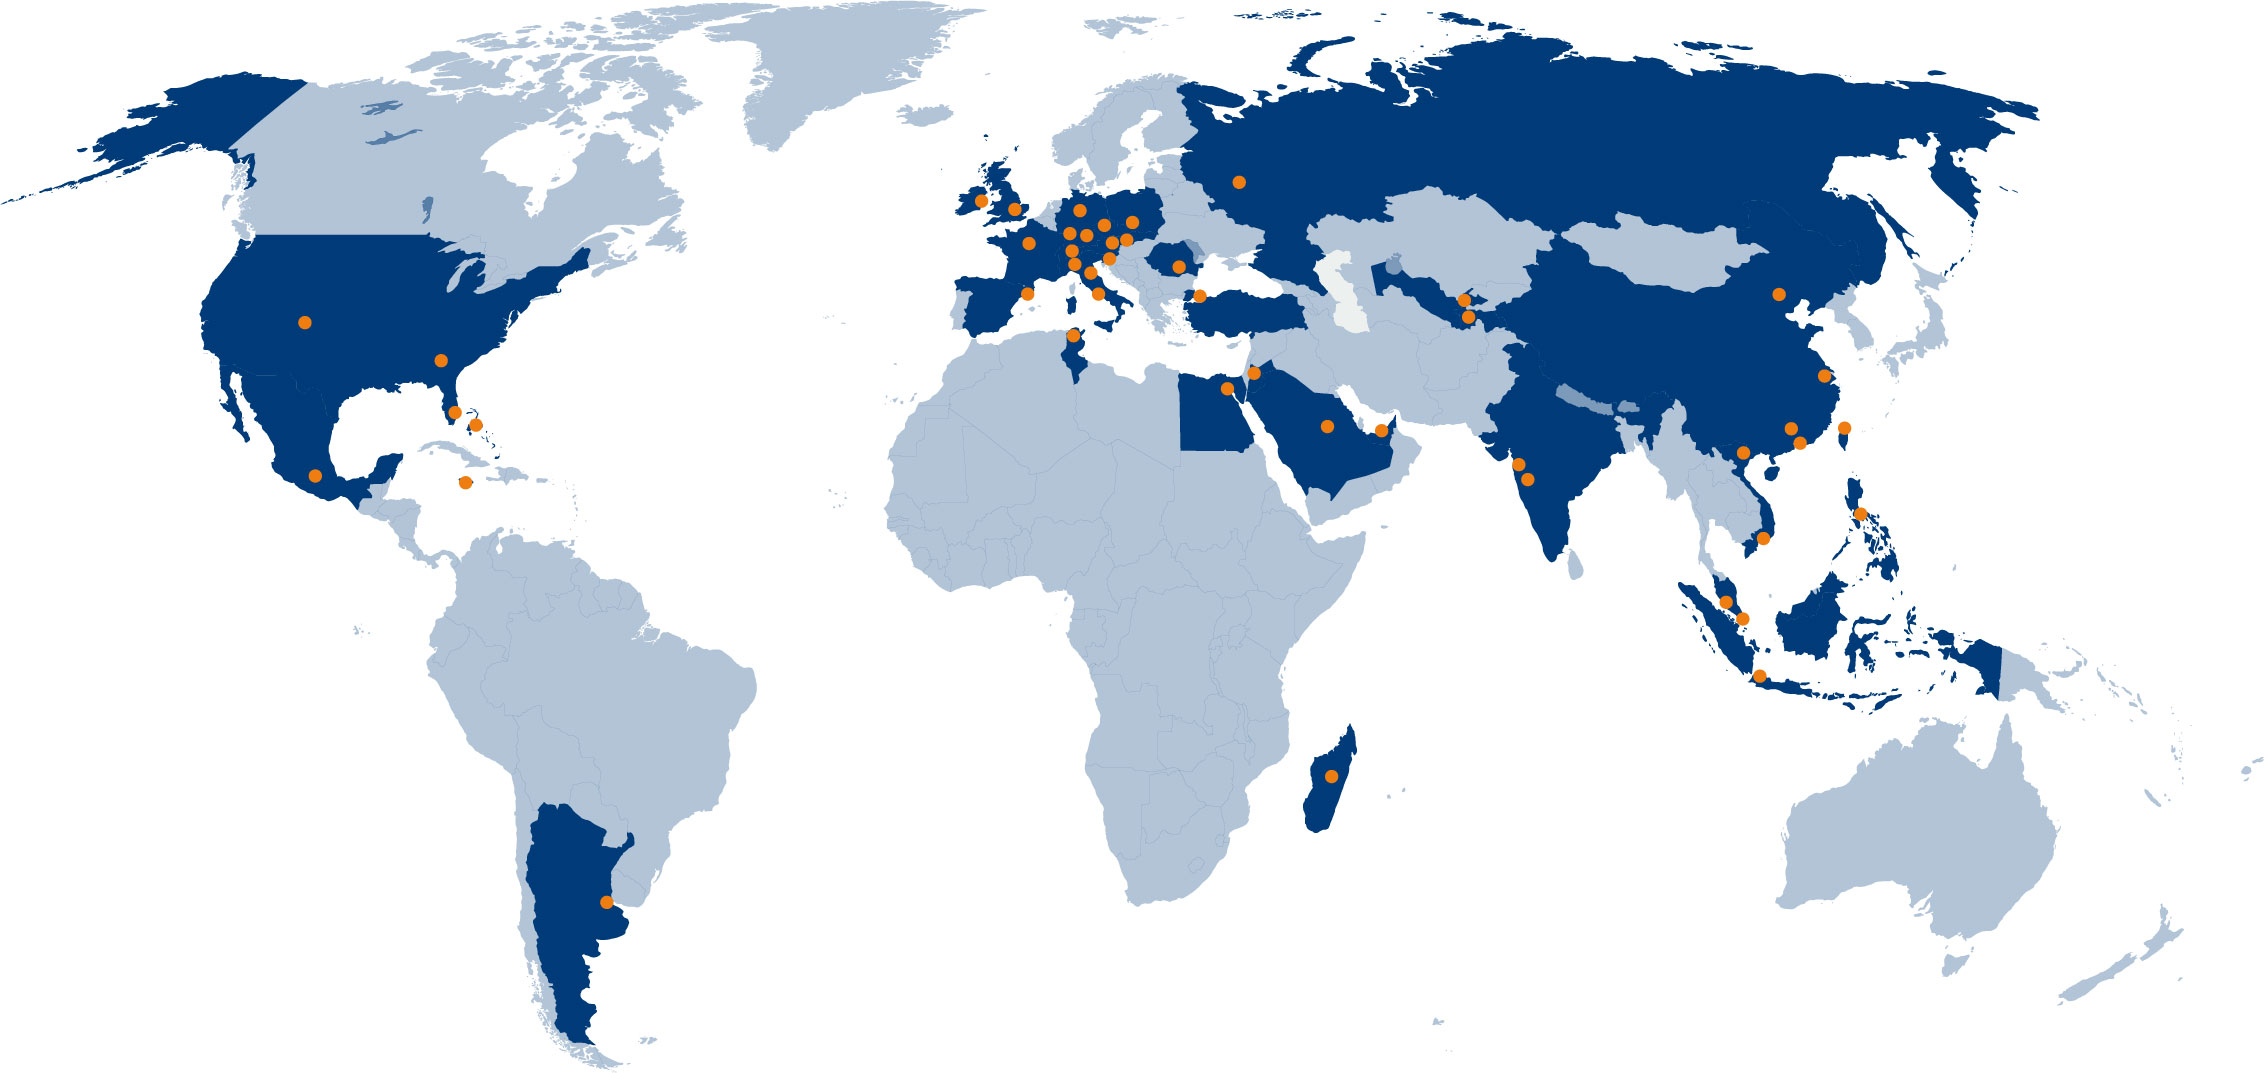 map-worldwide-presence Aug 2020 updated.jpg